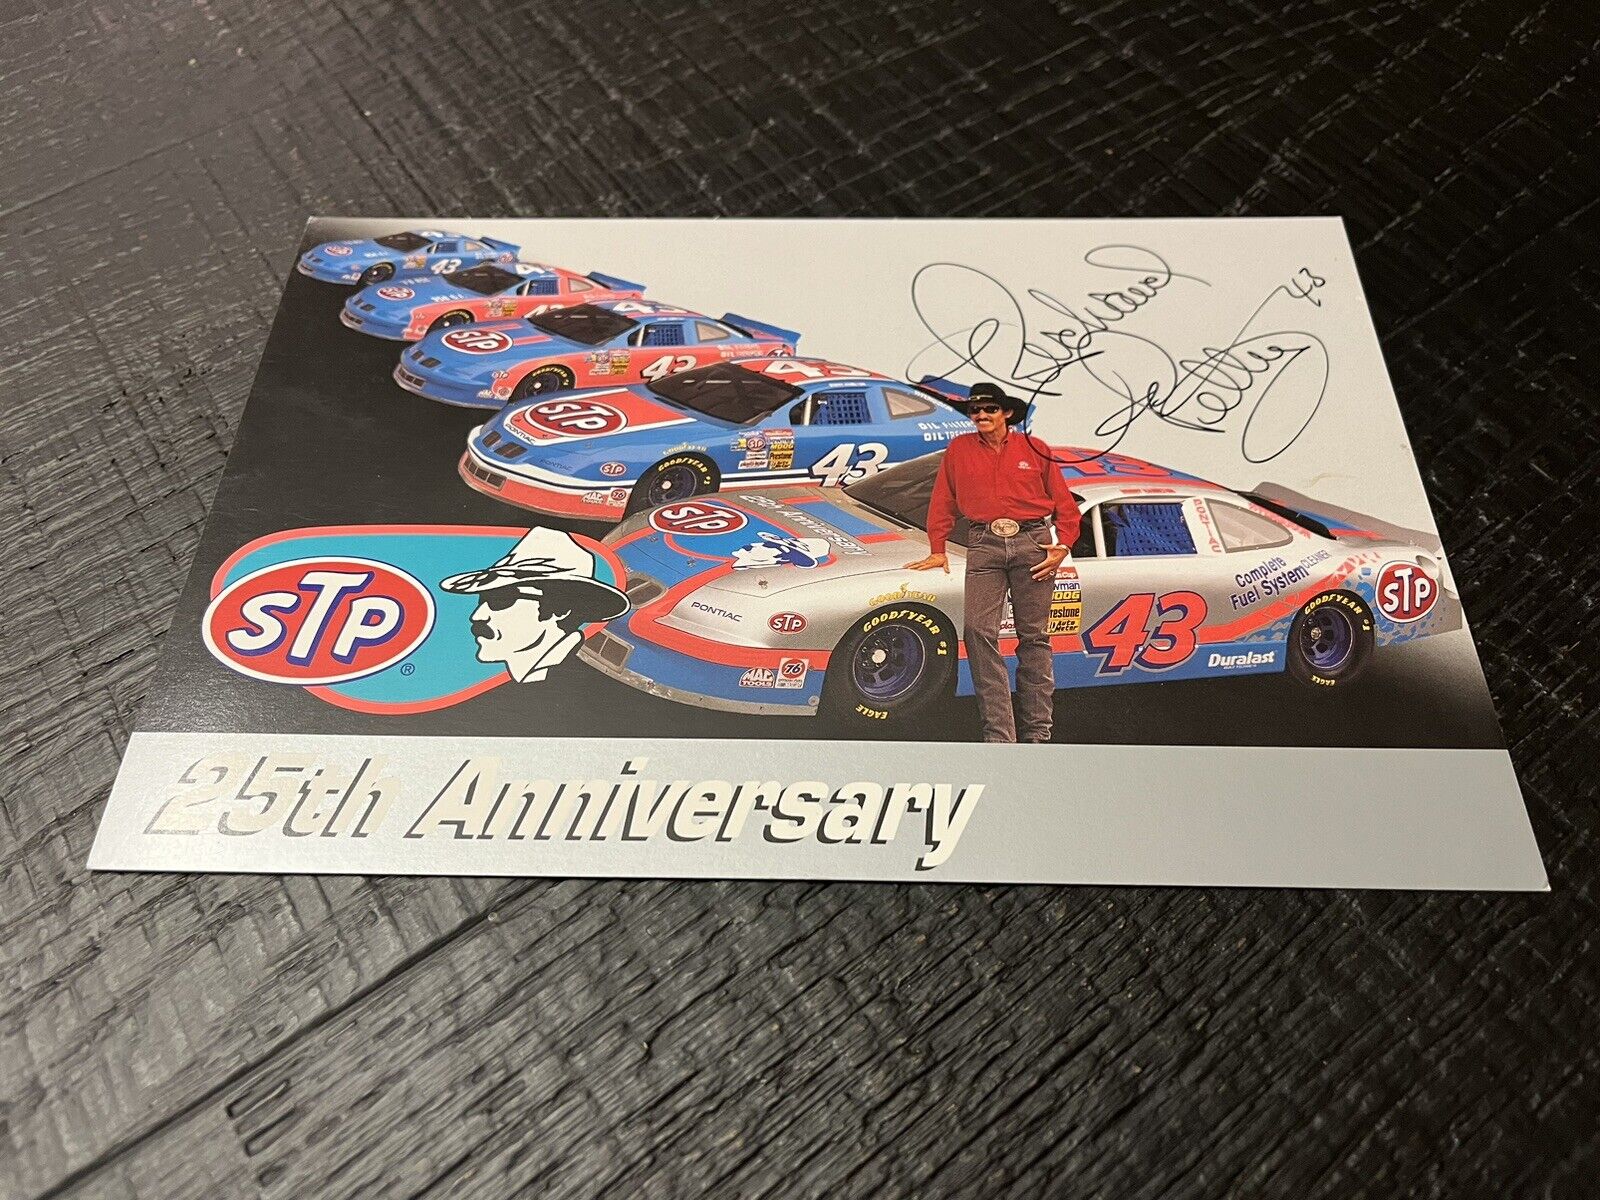 Richard Petty Signed 6x9 Photo NASCAR Racing Hero Card